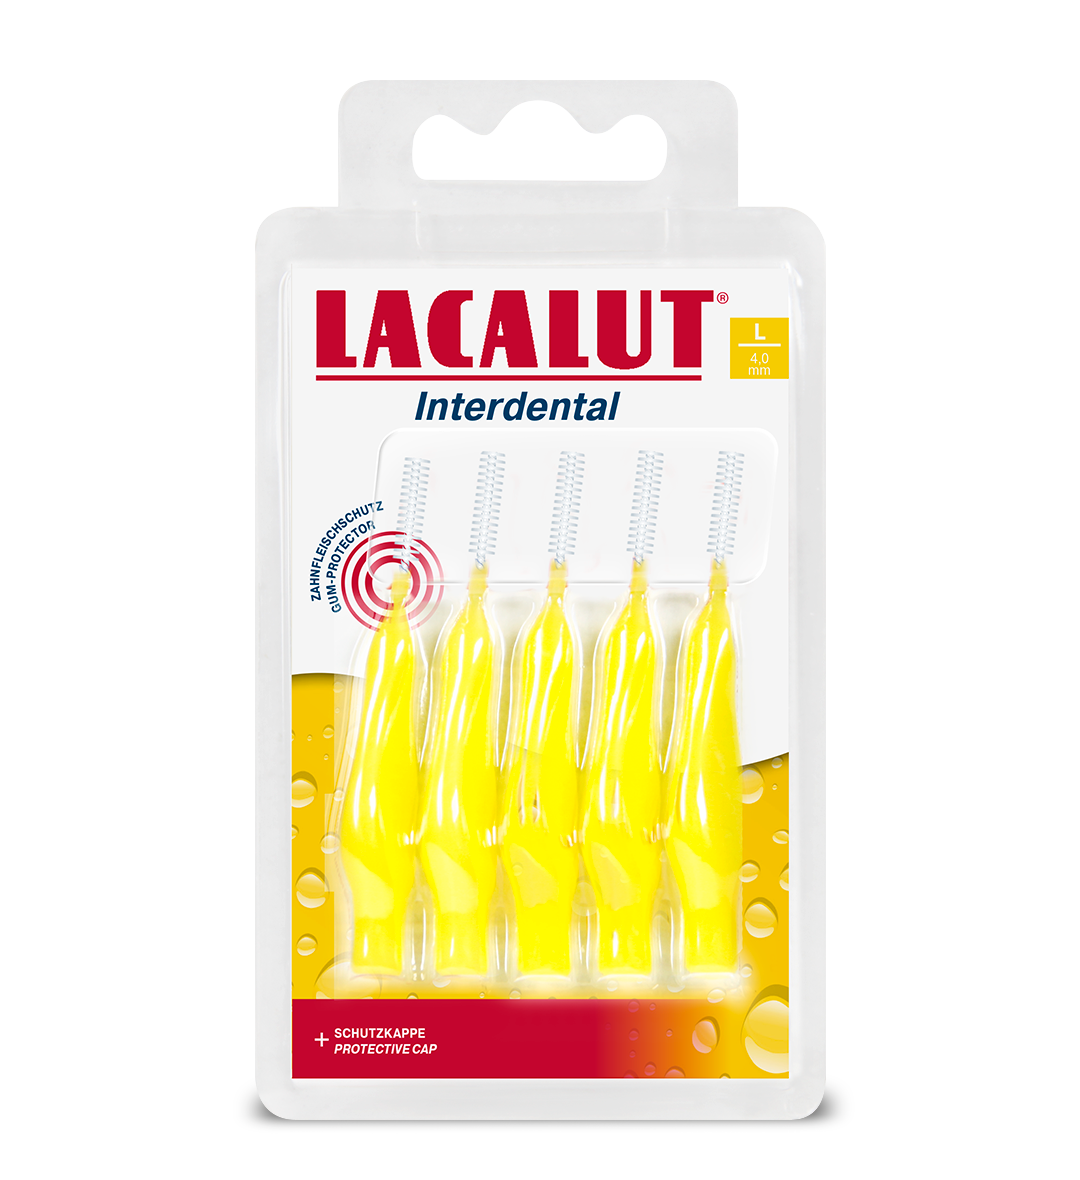 Lacalut Interdental